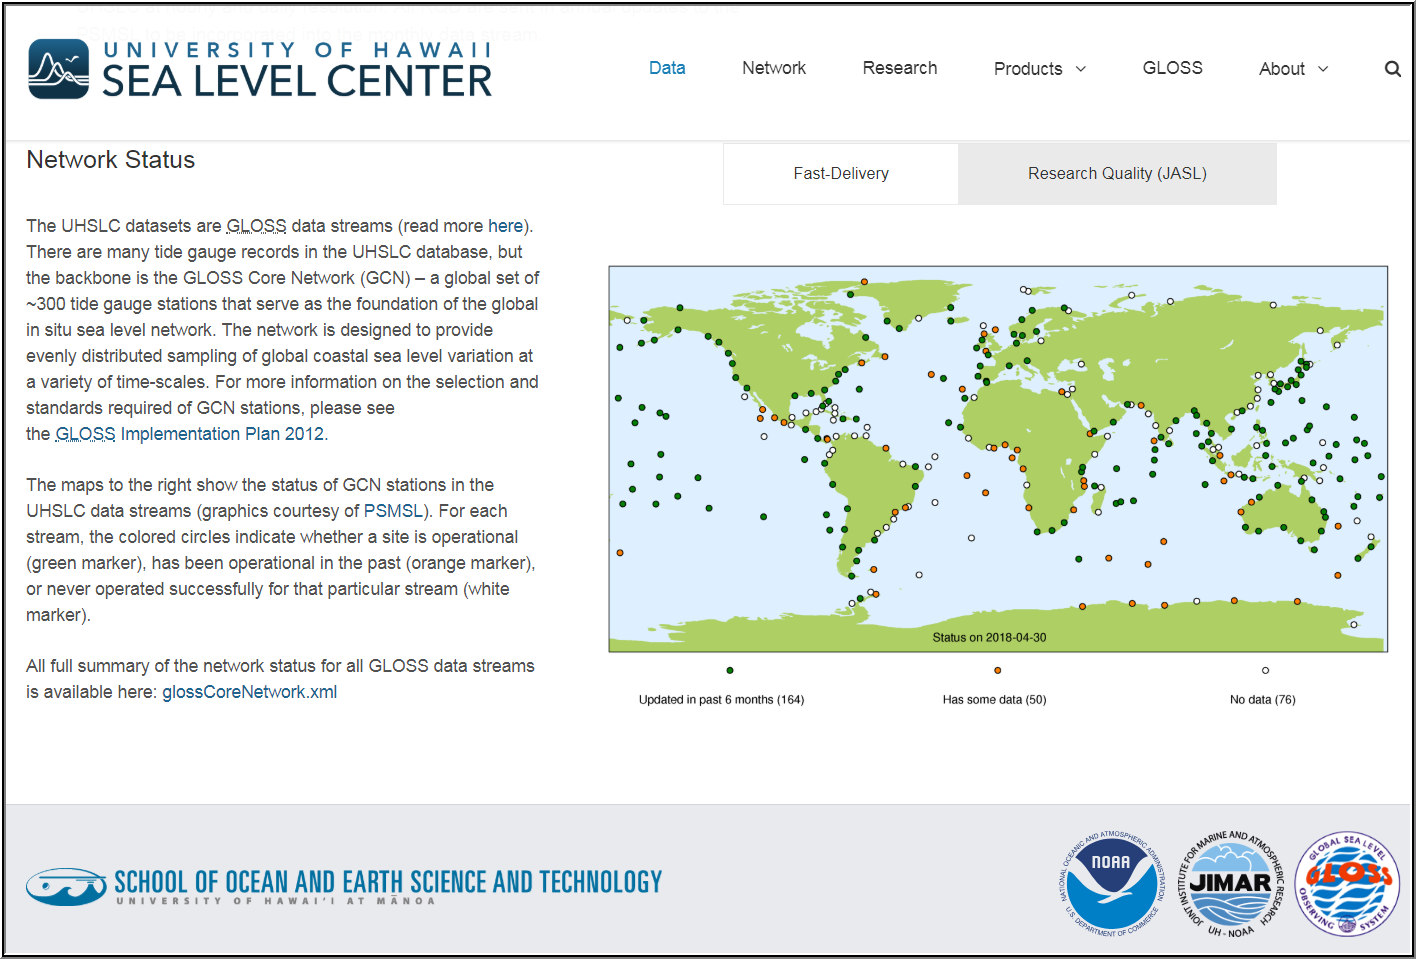 University of Hawaii Sea Level Center: Data